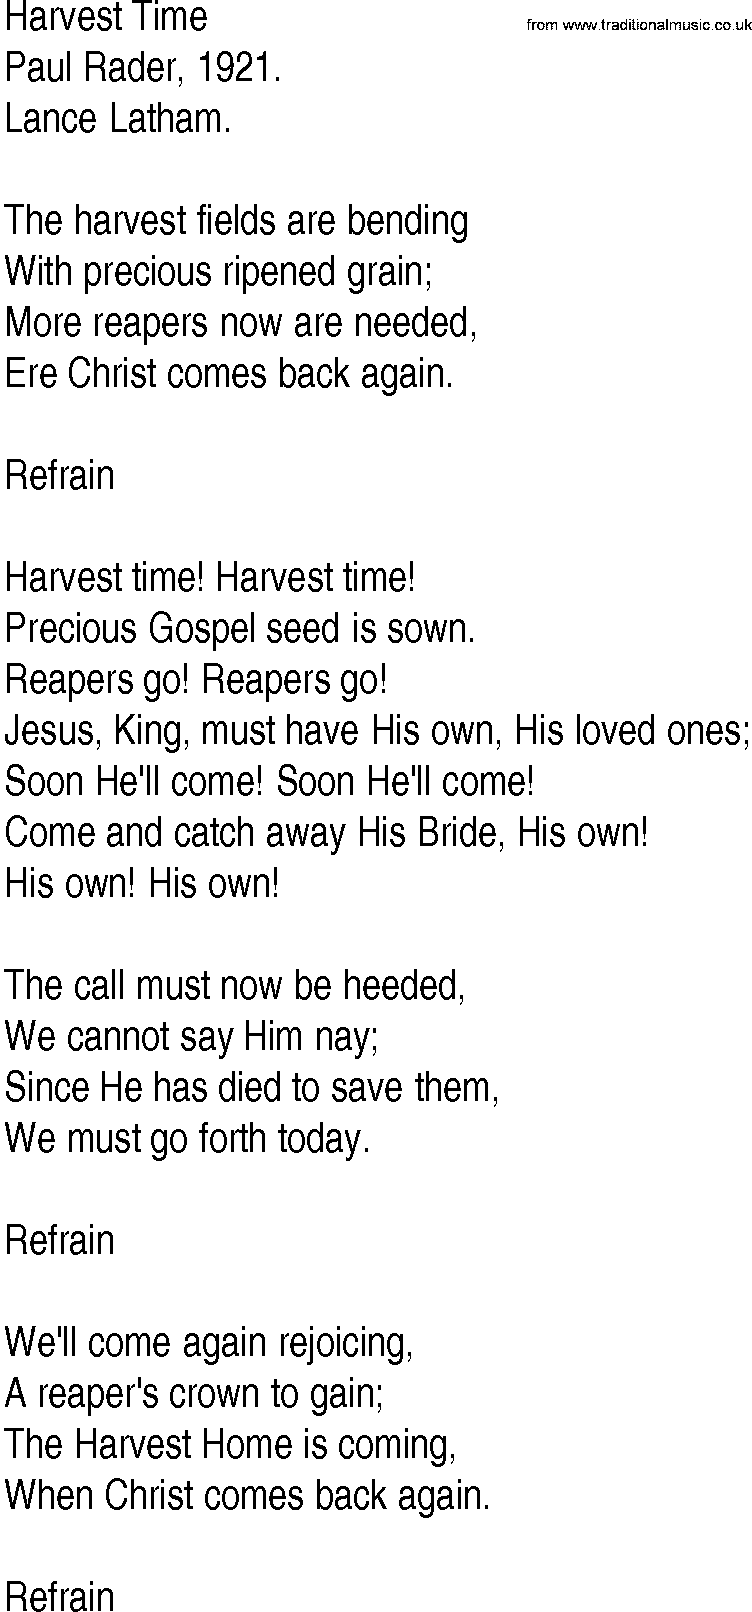 Hymn and Gospel Song: Harvest Time by Paul Rader lyrics